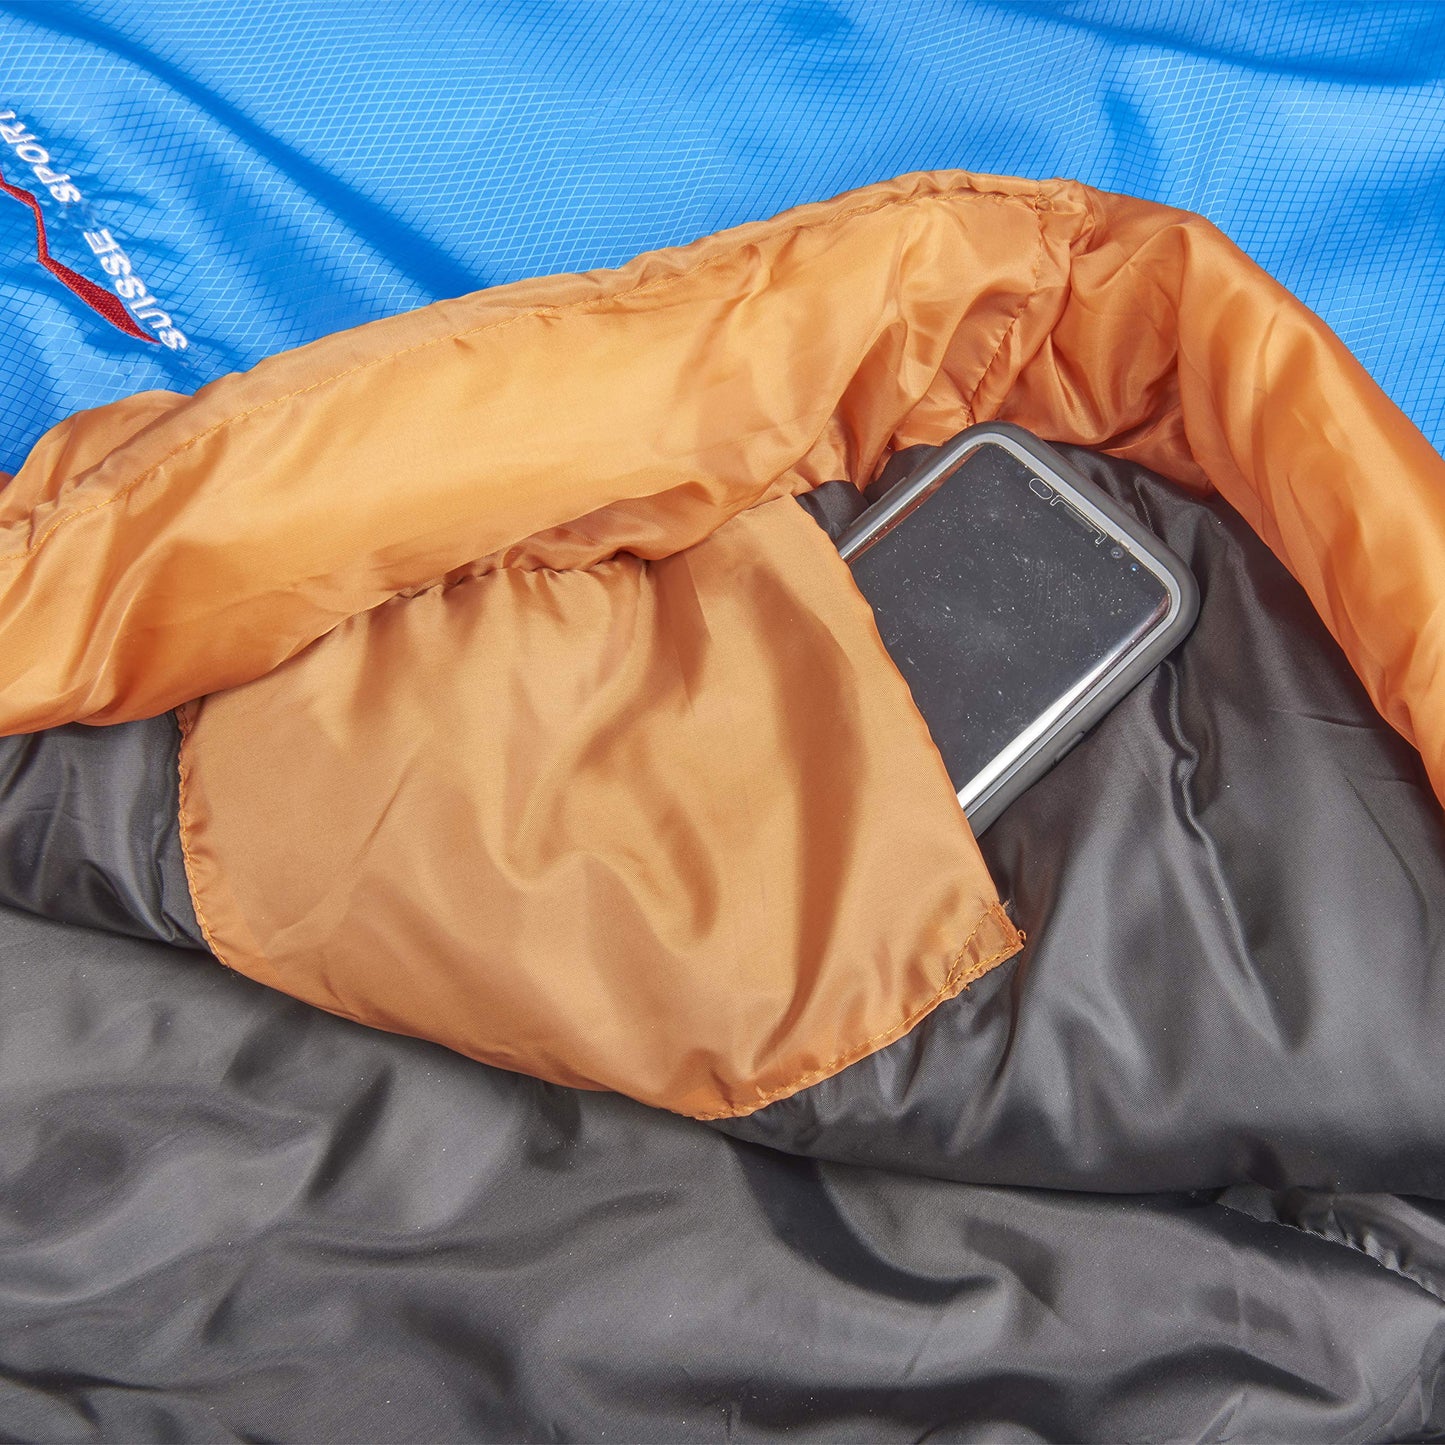 Suisse Sport Trekker Mummy 40 Degree Sleeping Bag, Multicolor